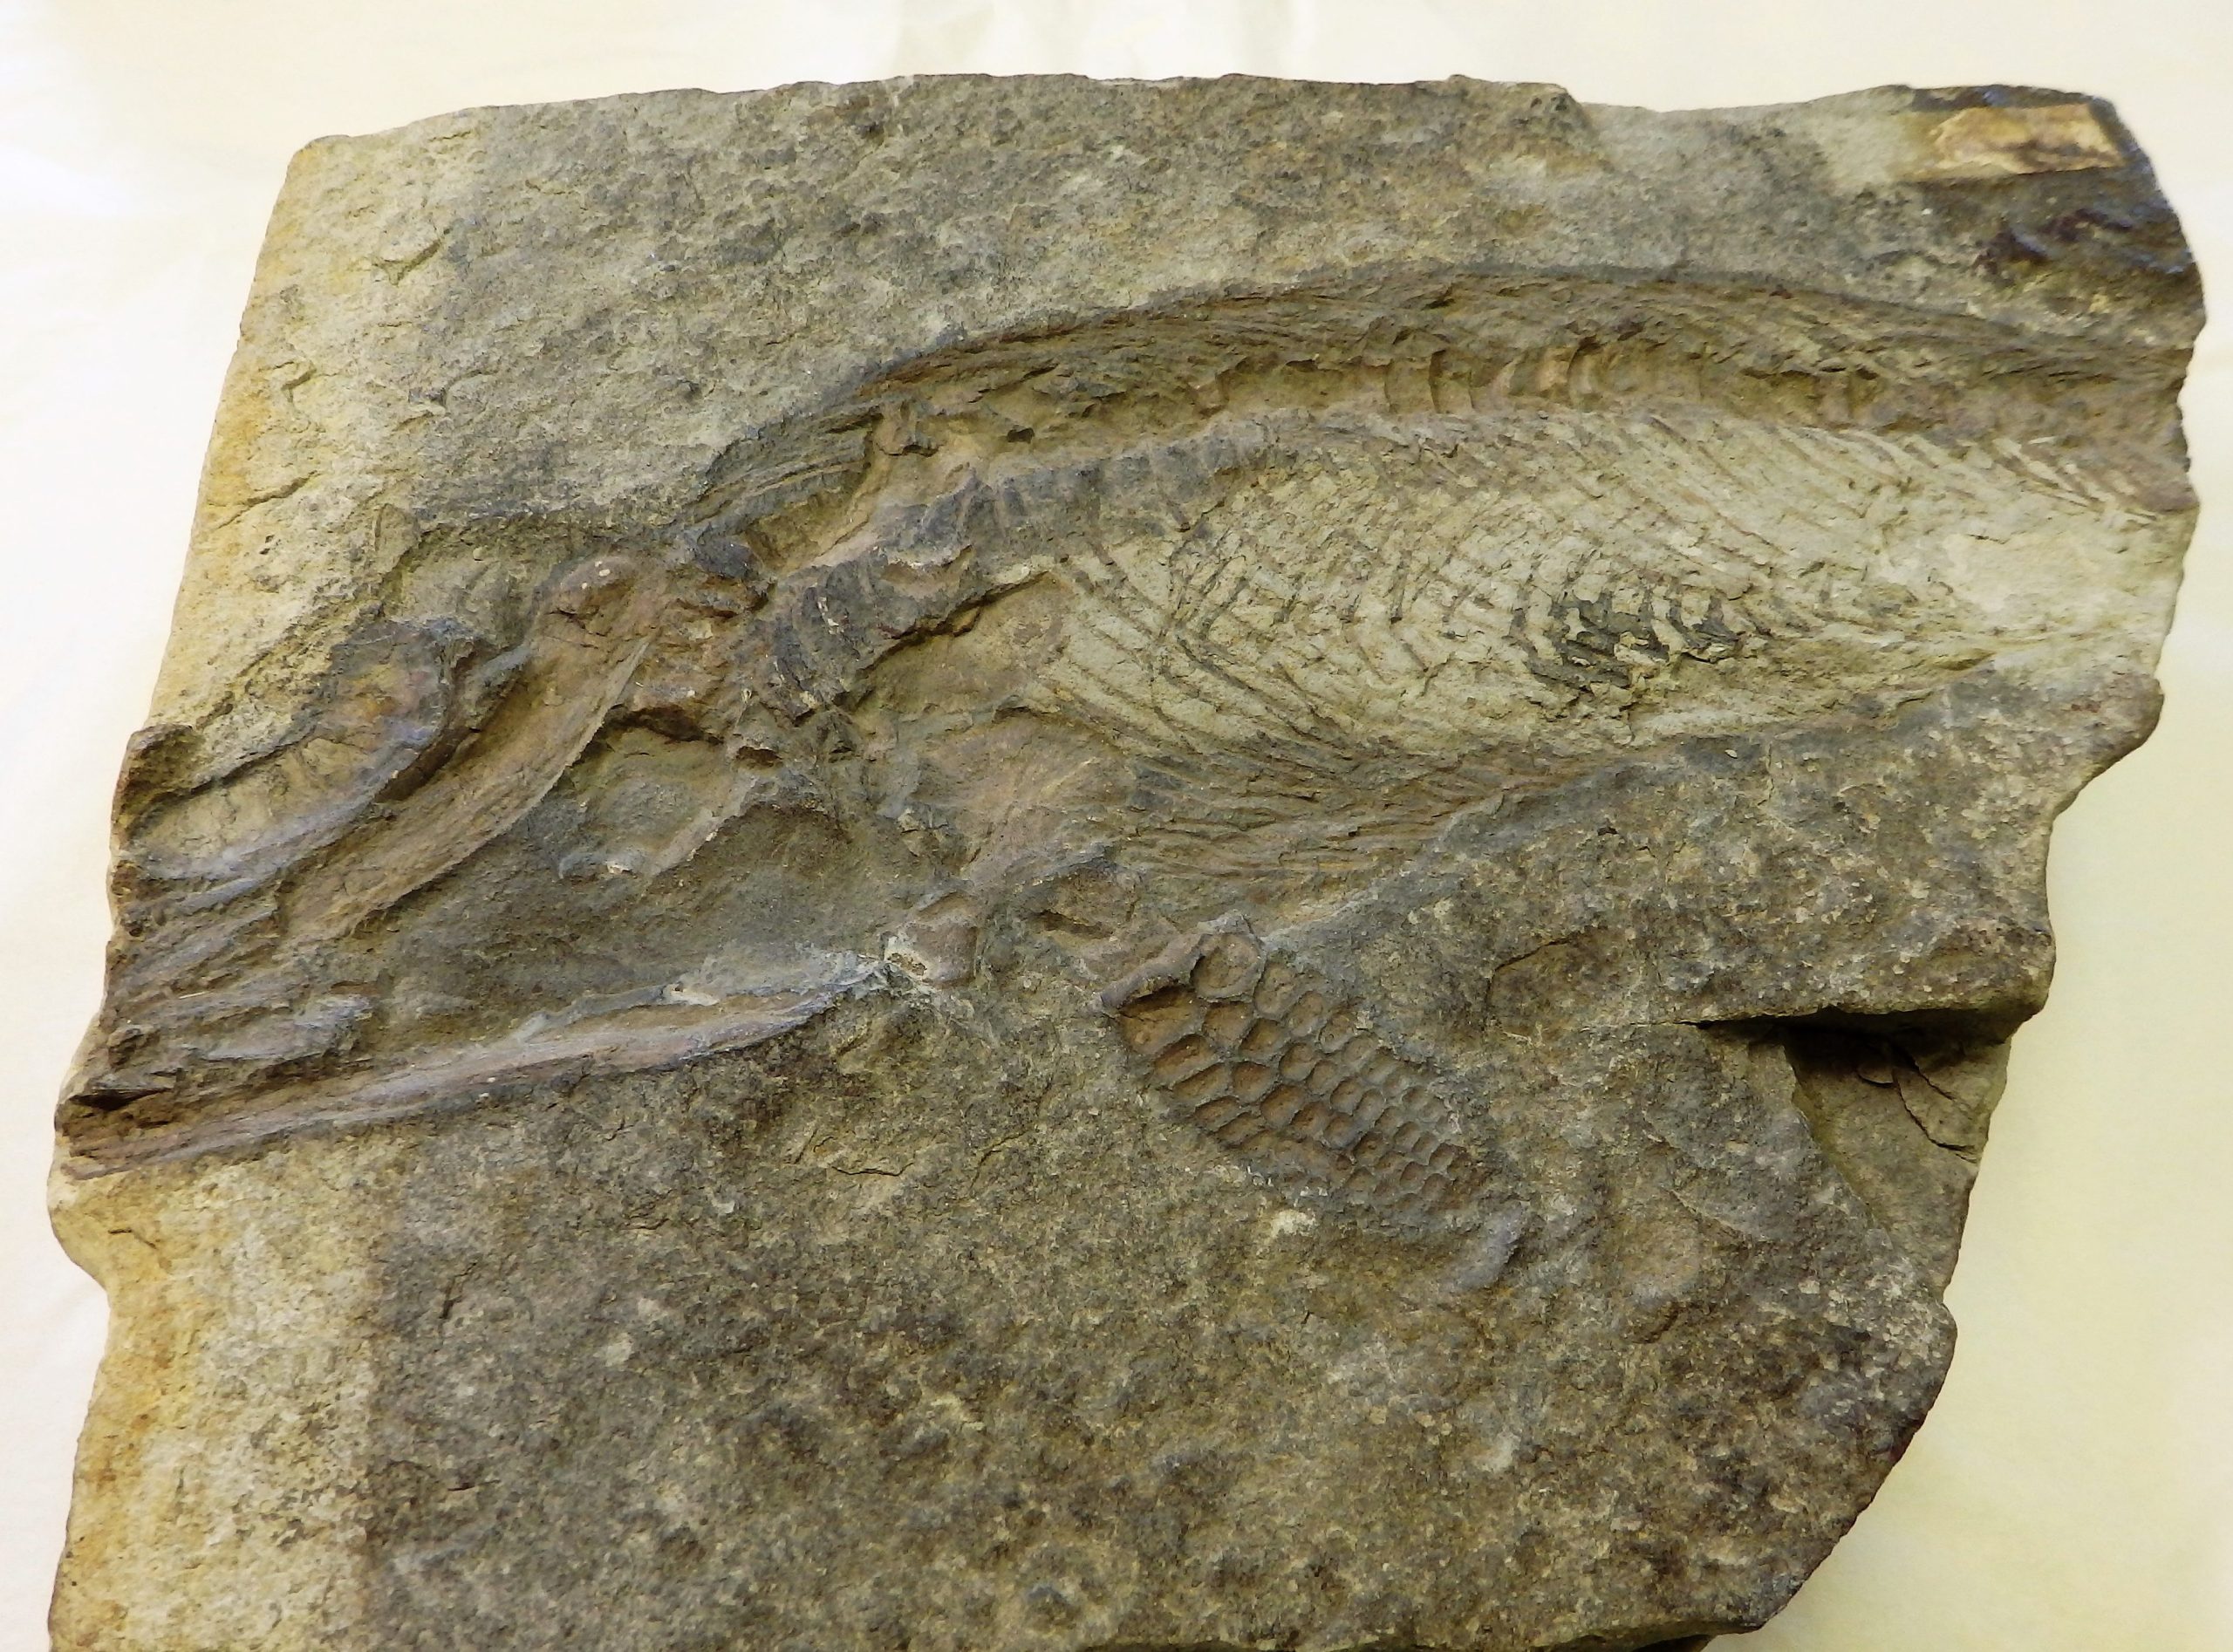 Neonate protoichthyosaur fossil